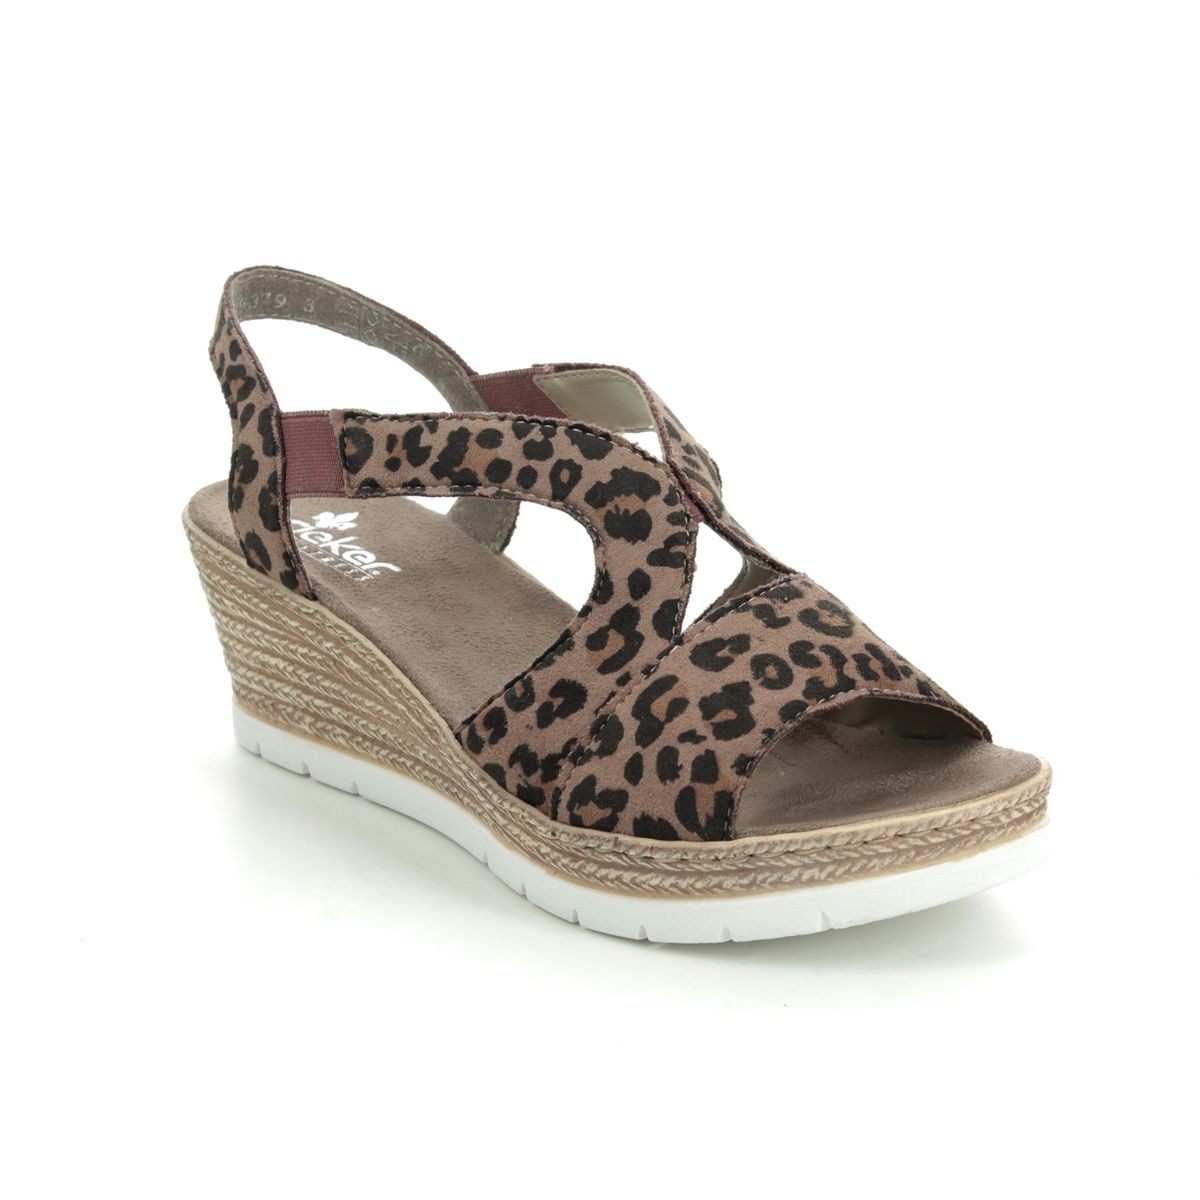 Rieker 61929-25 Leopard print Wedge Sandals